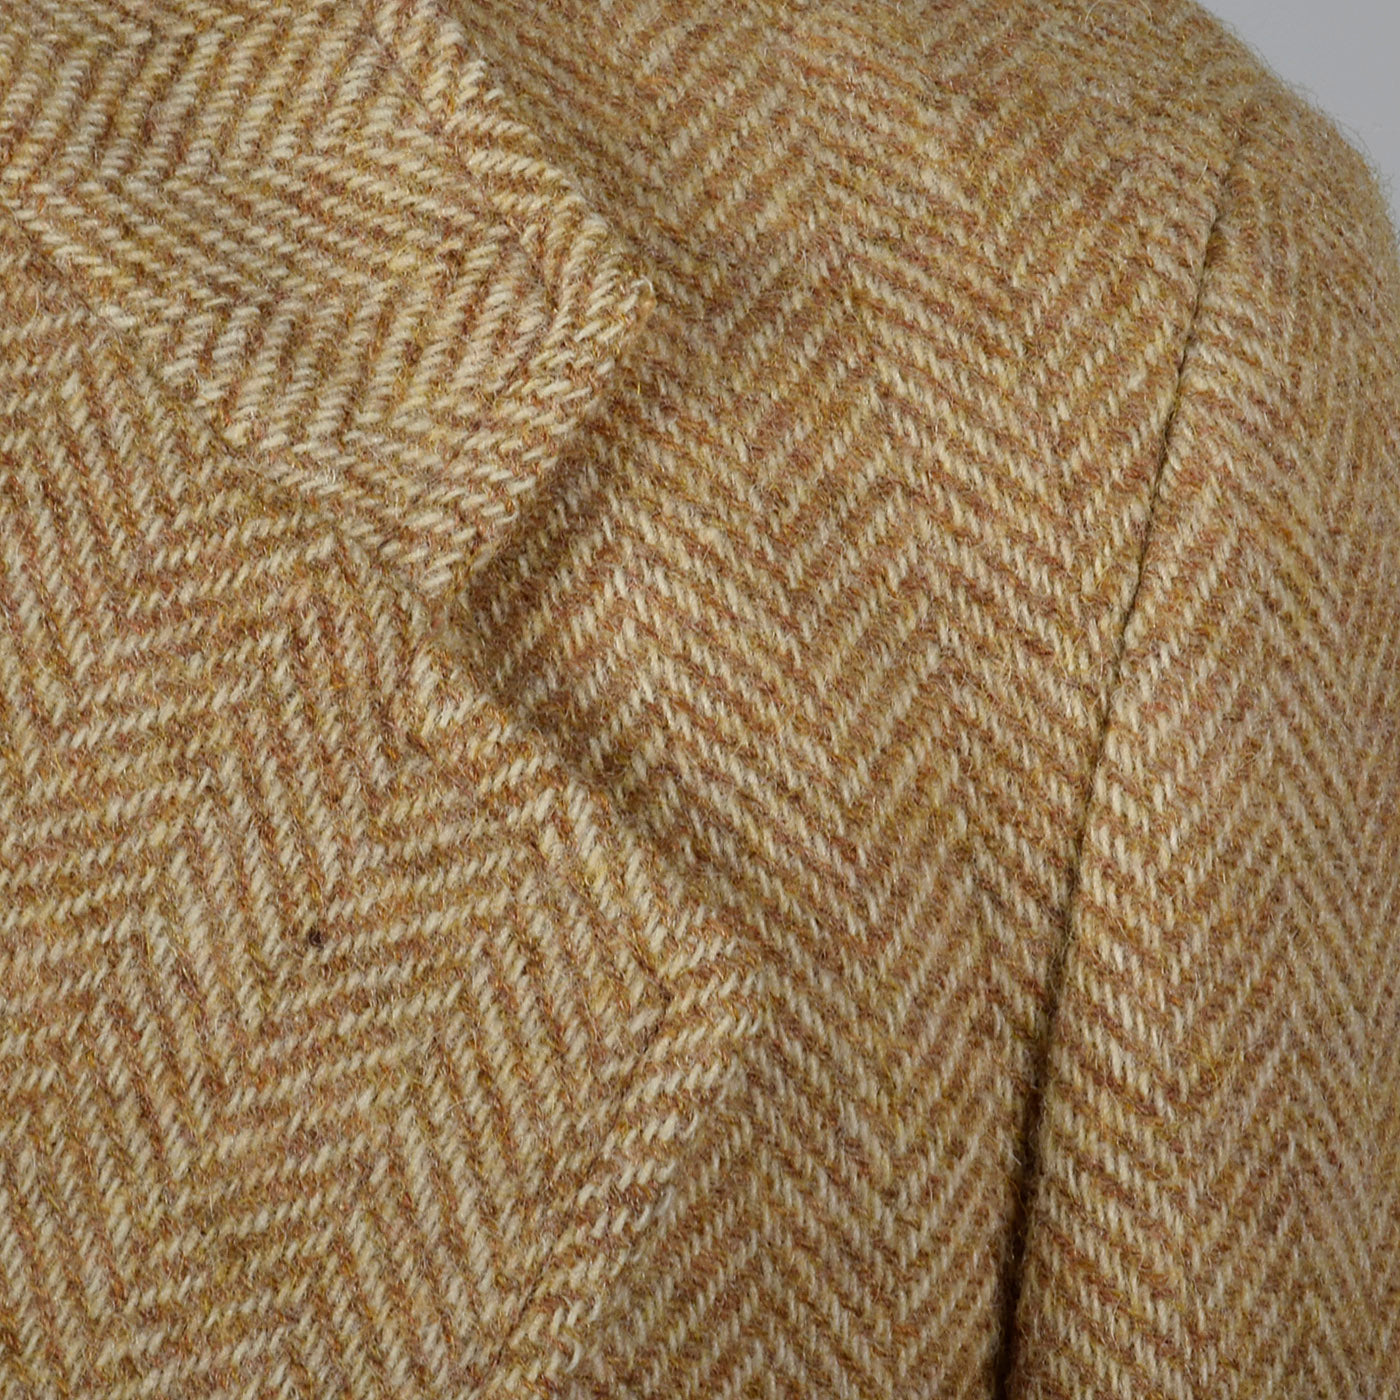 1970s Wool Tan Jacket